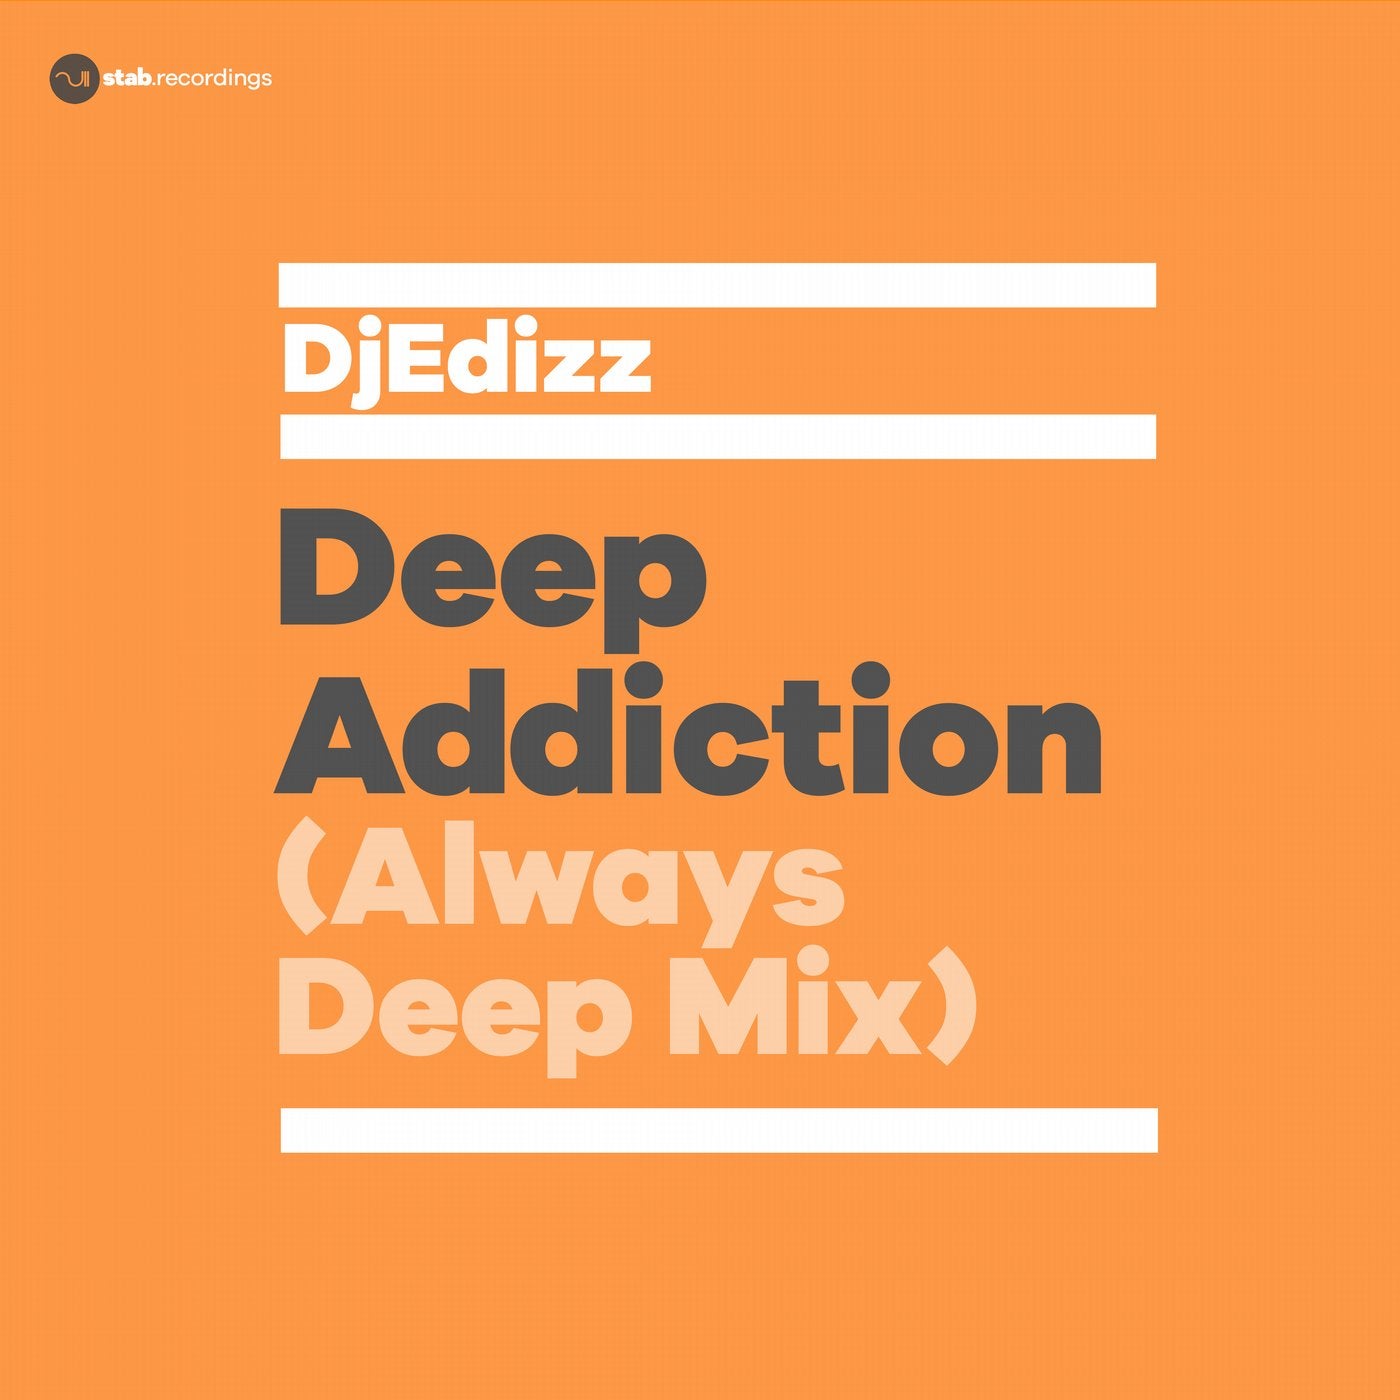 Deep Addiction(Always Deep Mix)